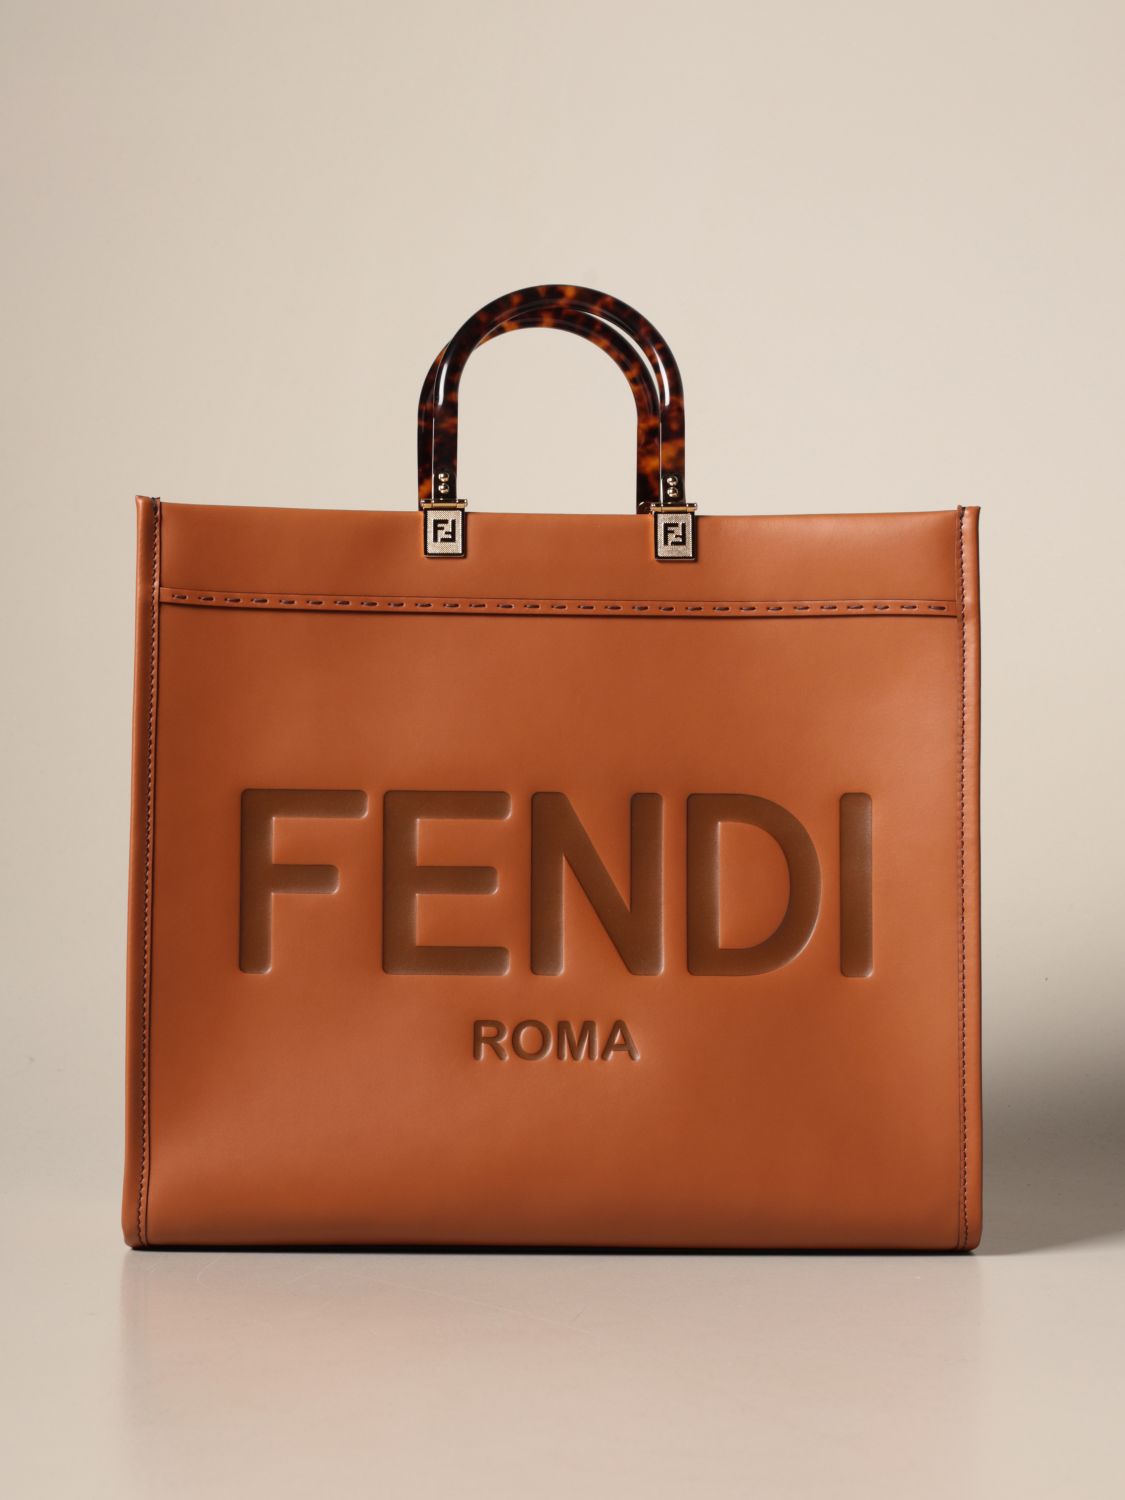 FENDI: leather shopping bag with big Roma logo | Tote Bags Fendi Women